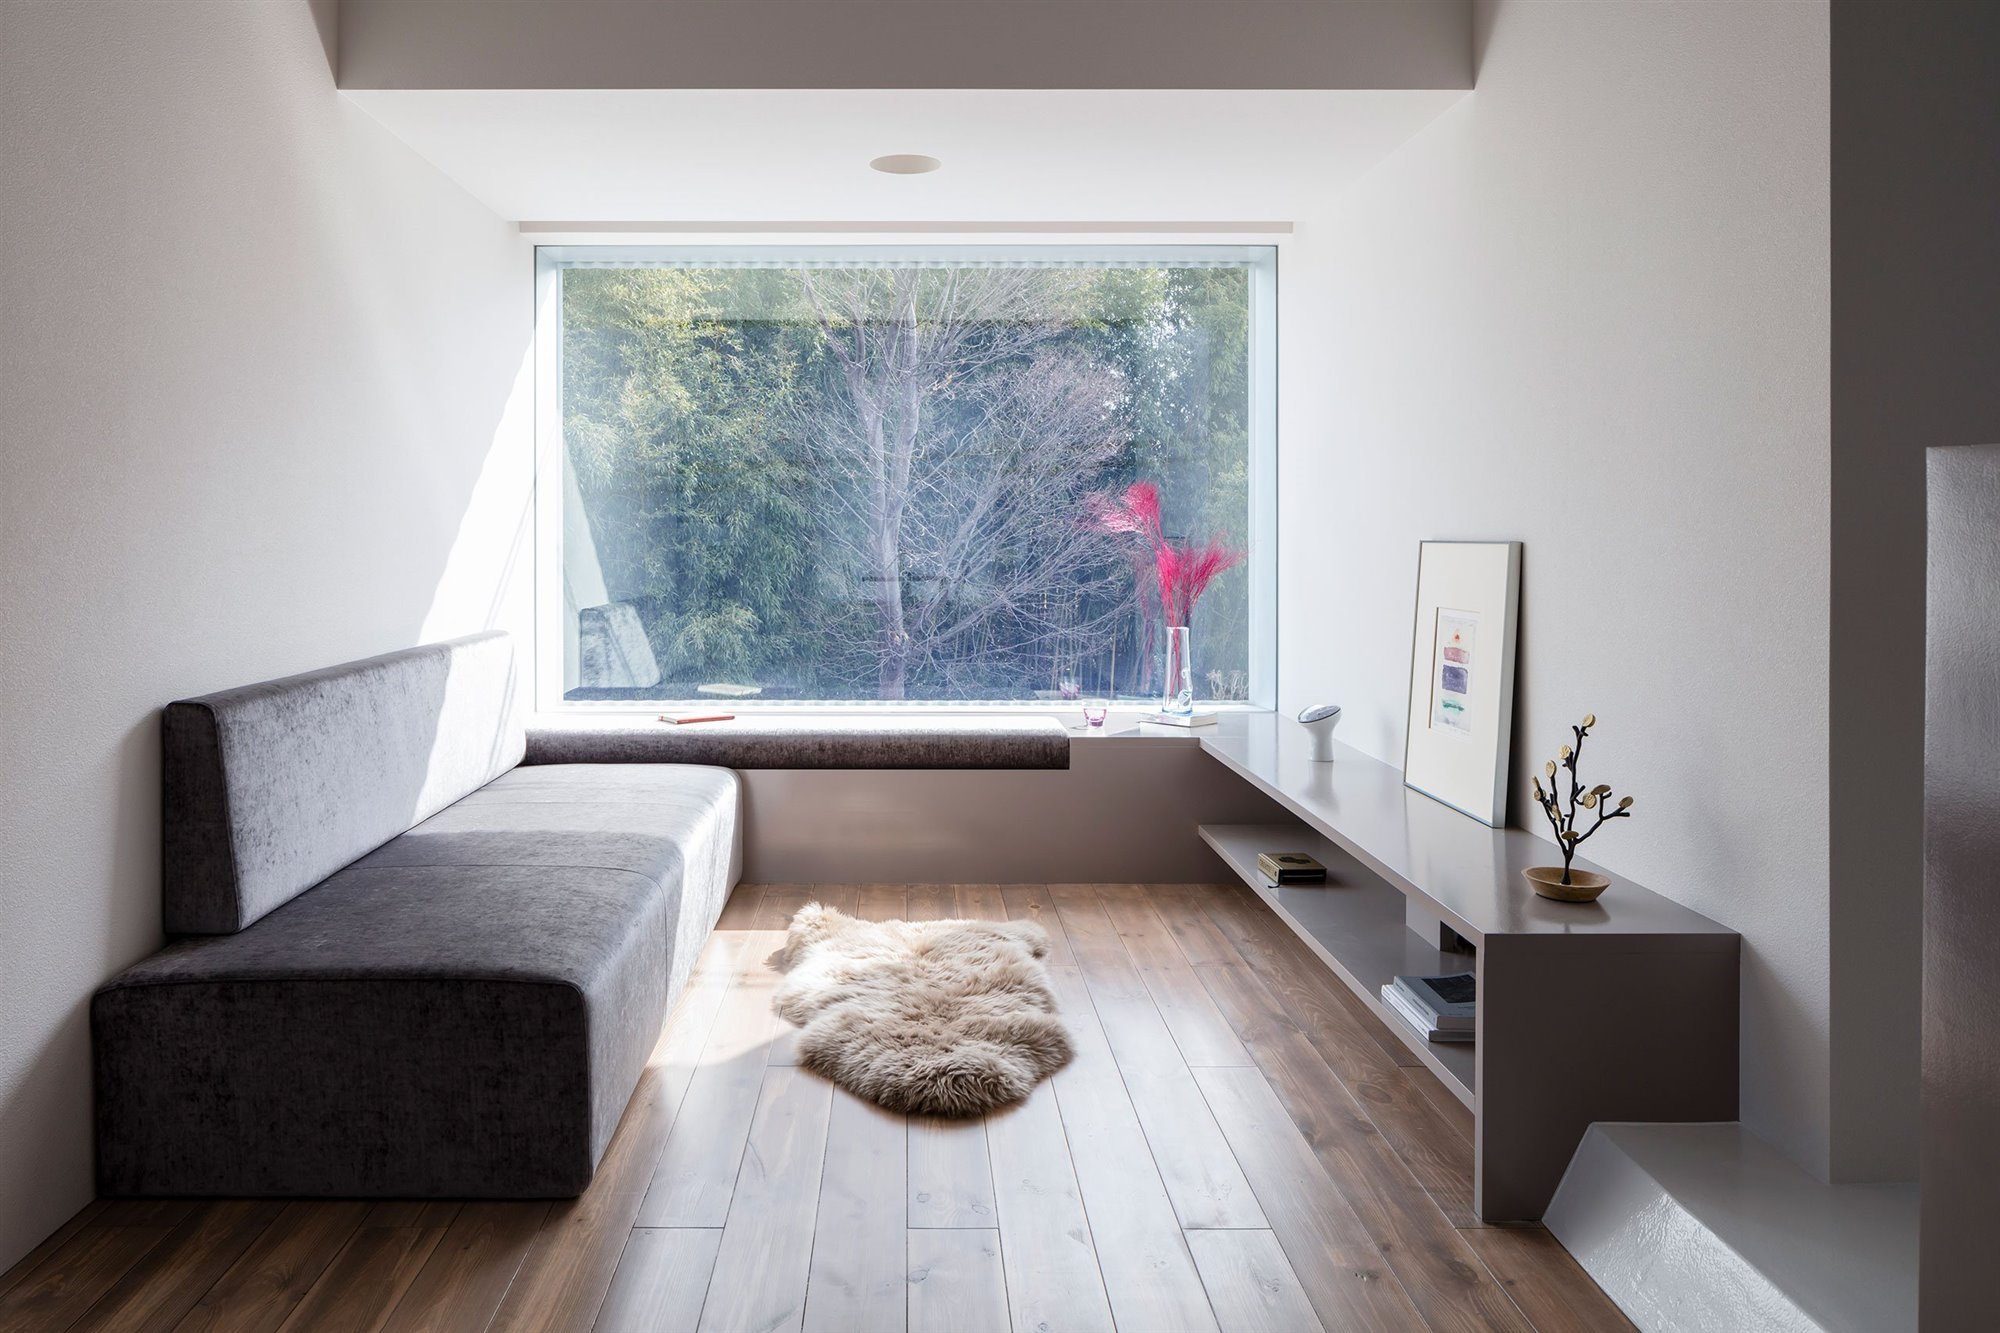 Casa moderna con decoracion de estilo minimalista en japon salon